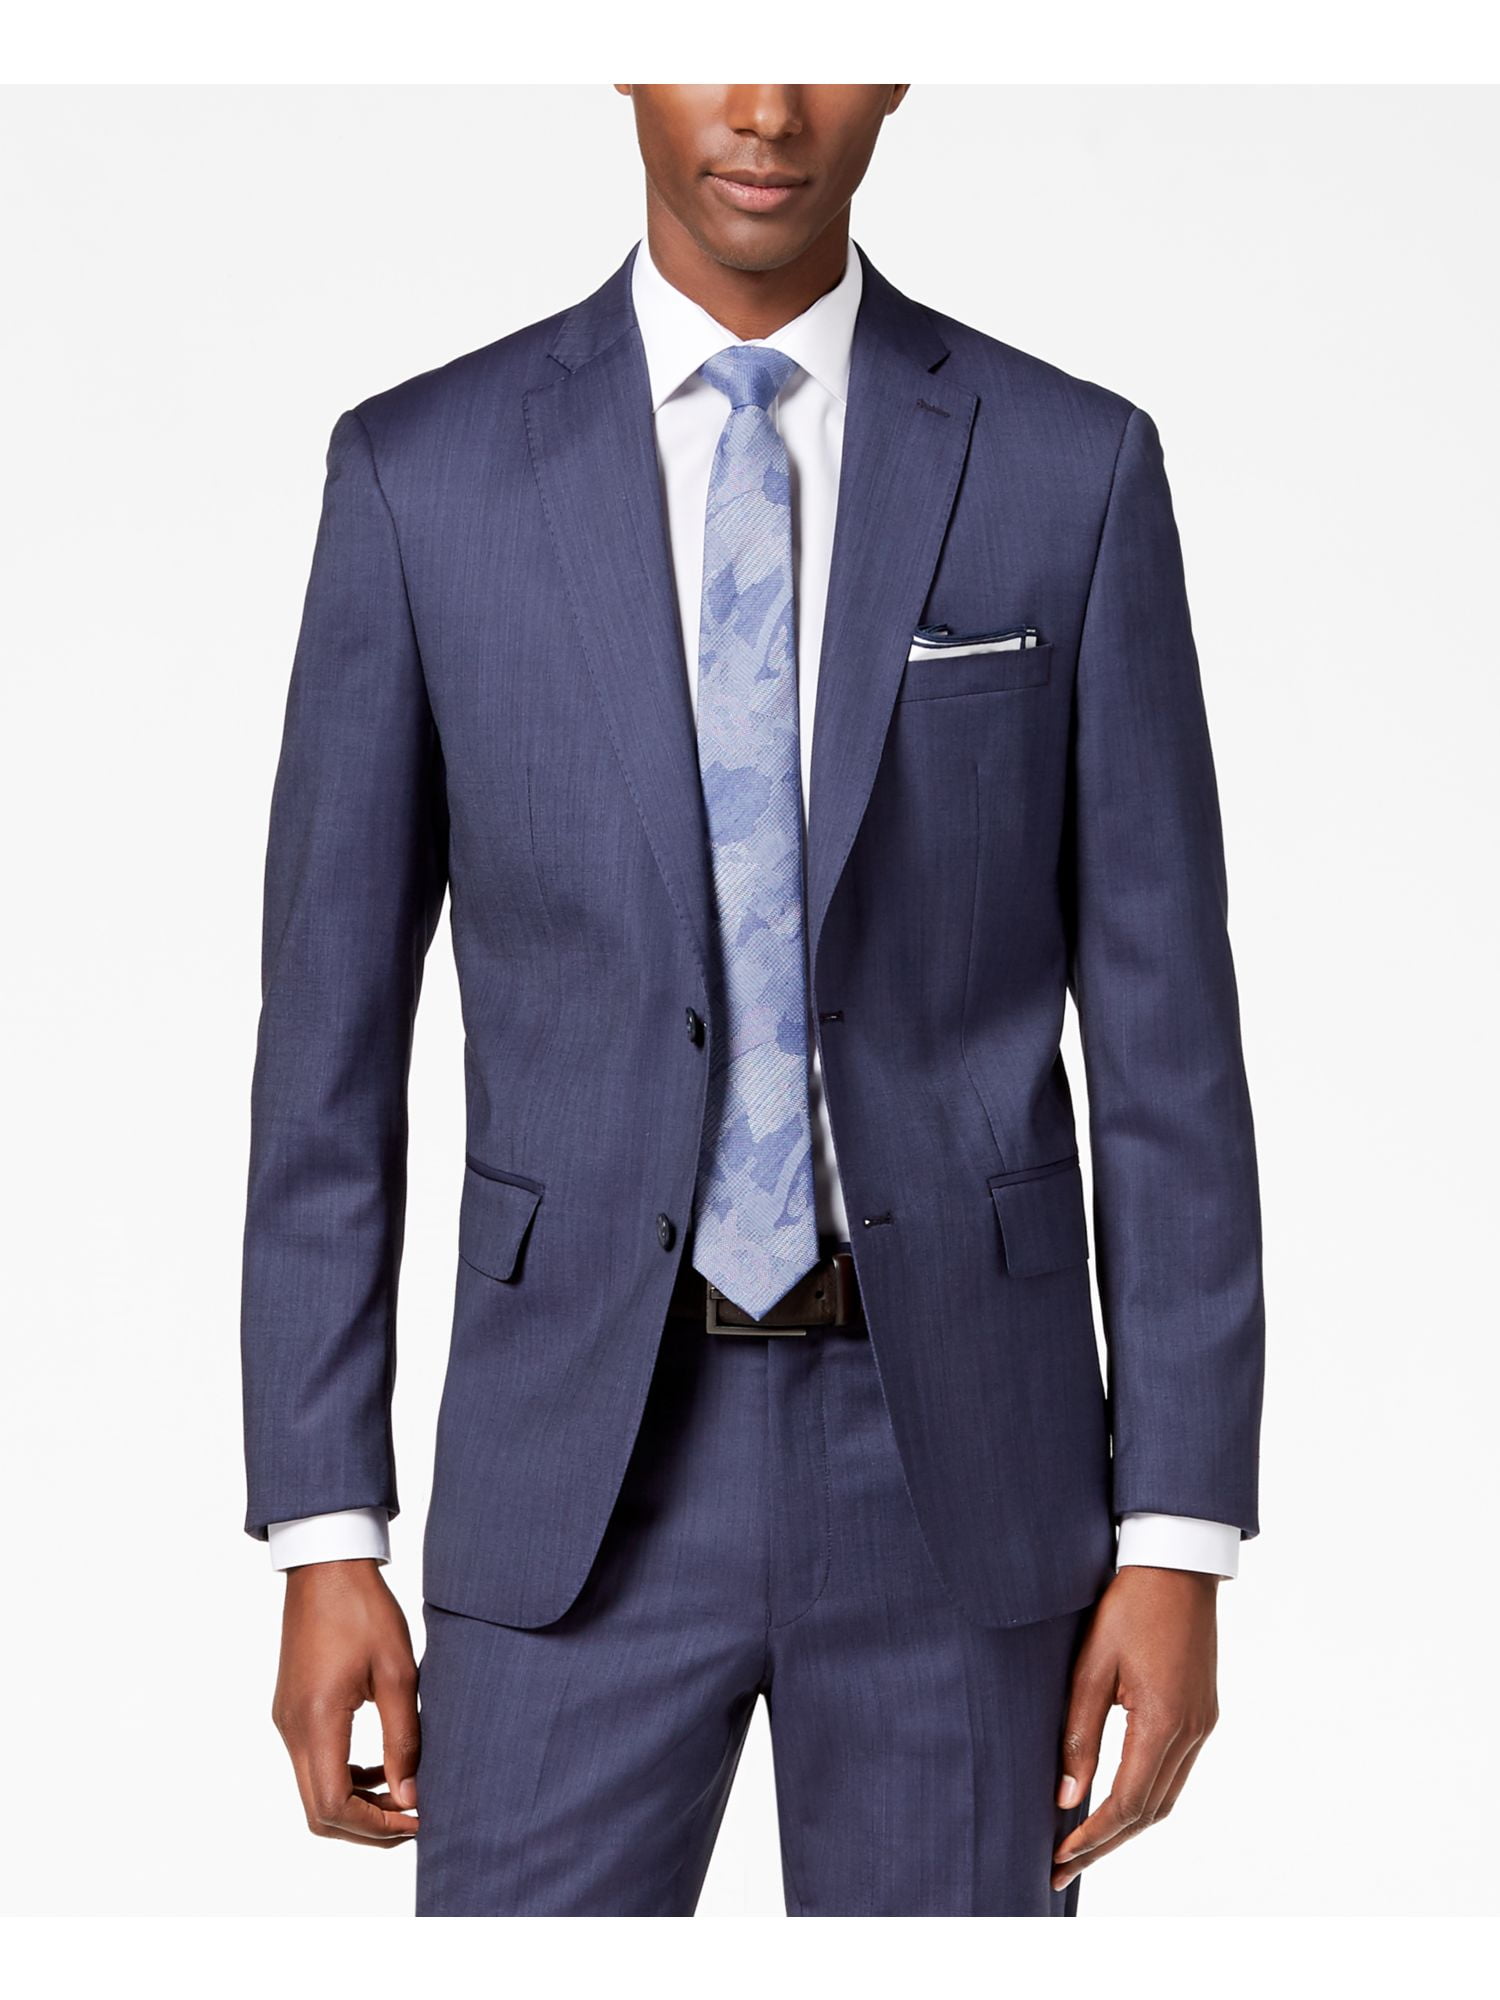 DKNY Navy Pinstripe Suit Separate Blazer Jacket Walmart.com